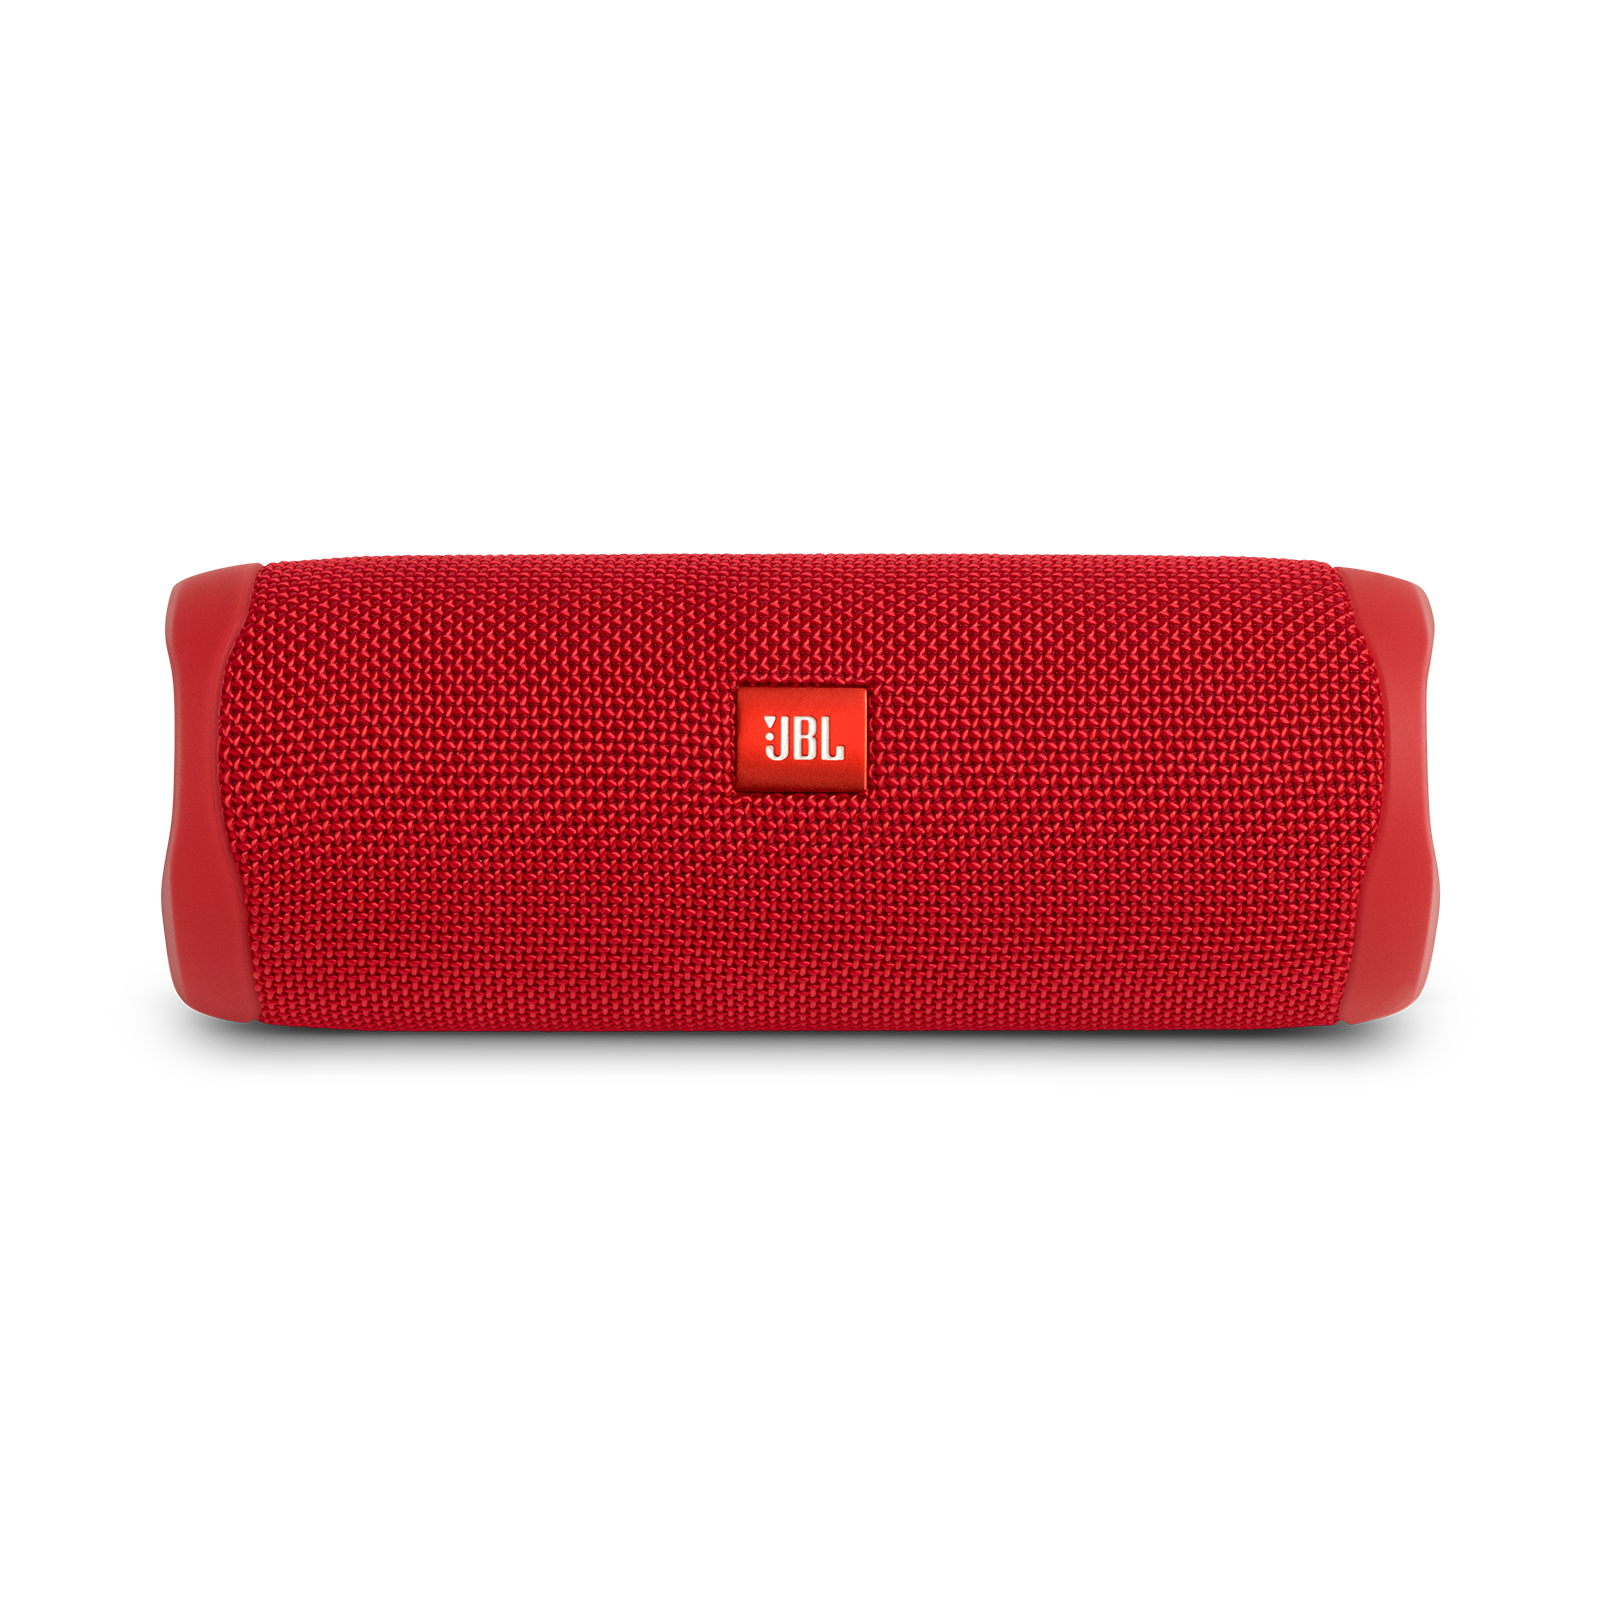 JBL Flip 5 - Red - Portable Waterproof Speaker - Front